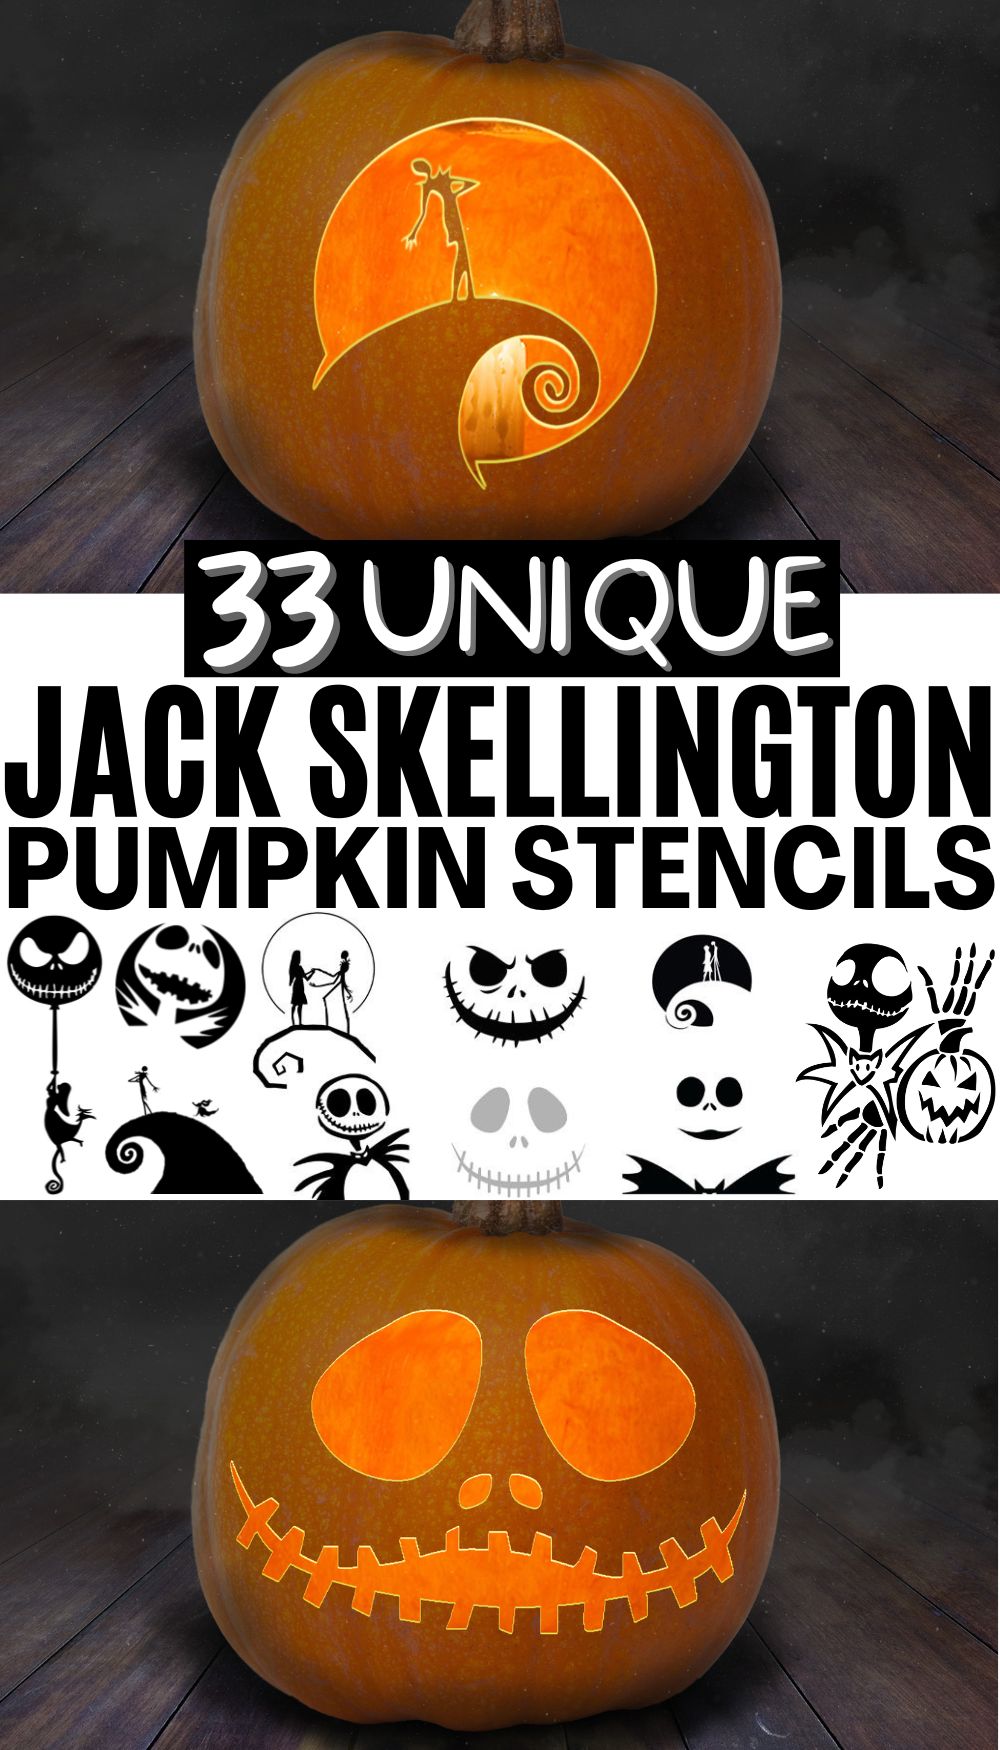 Jack Skellington pumpkin with the text 33 unique jack skellington pumpkin stencils and several black and white images 